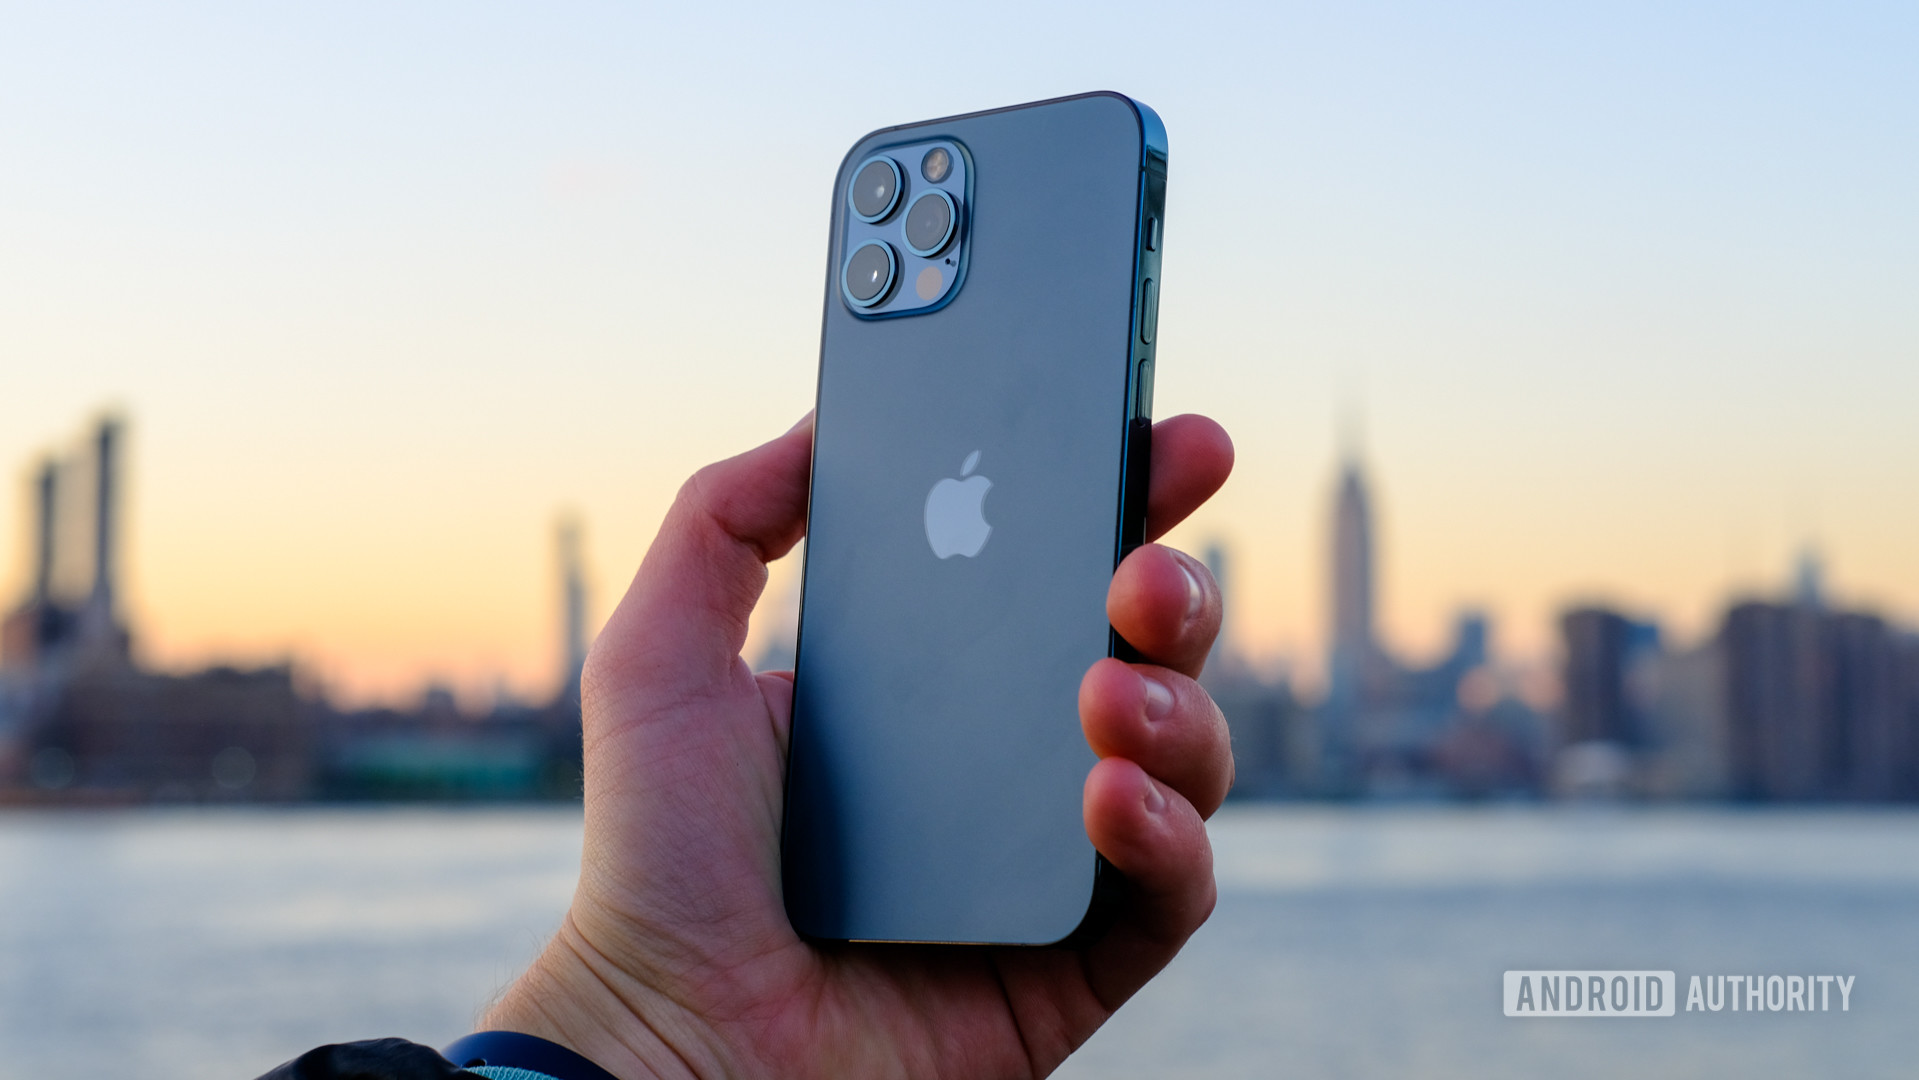 iPhone 12 Pro holding bakc of phone against sunset